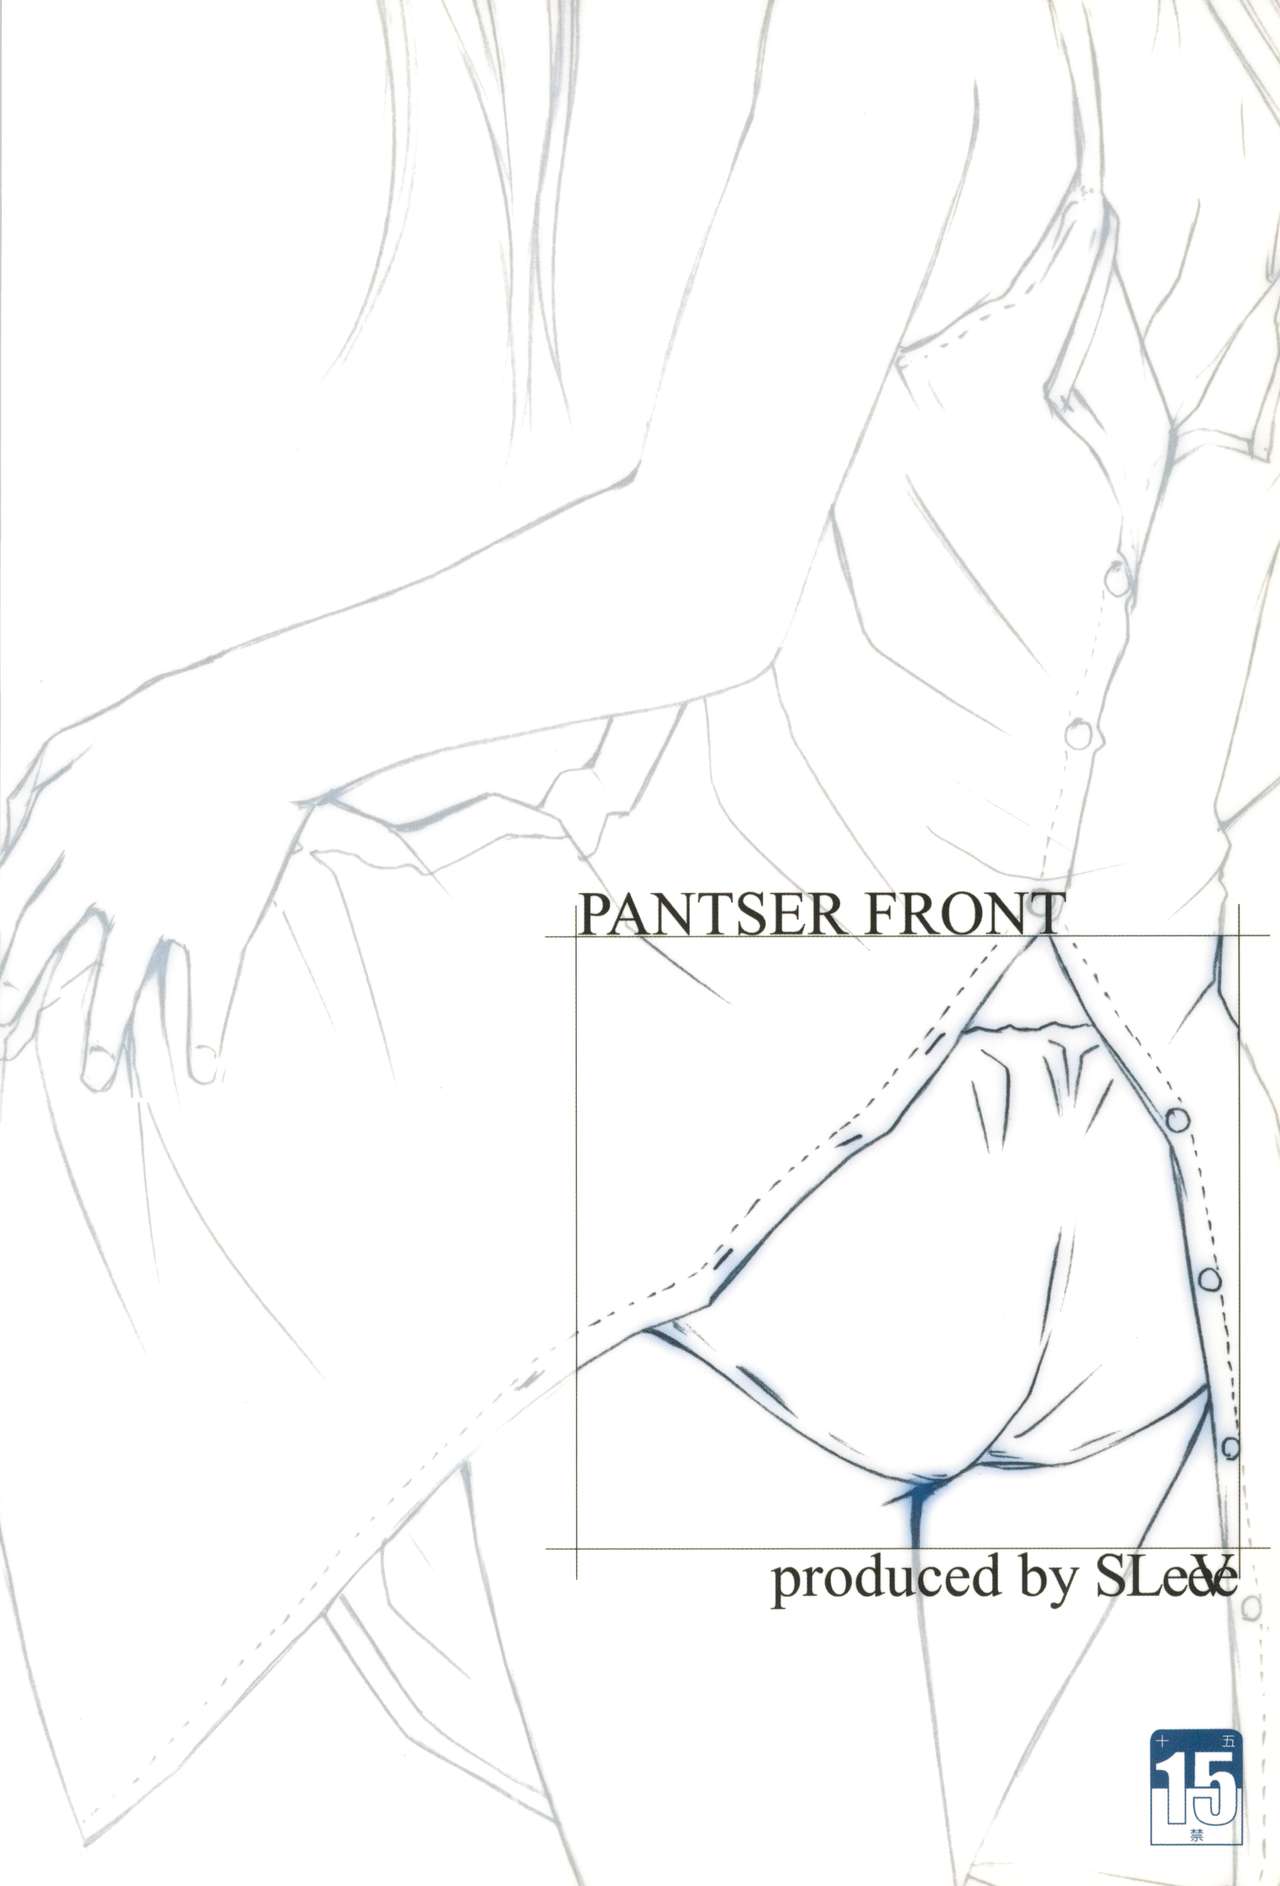 (C68) [SLeeVe (Sody)] PANTSER FRONT